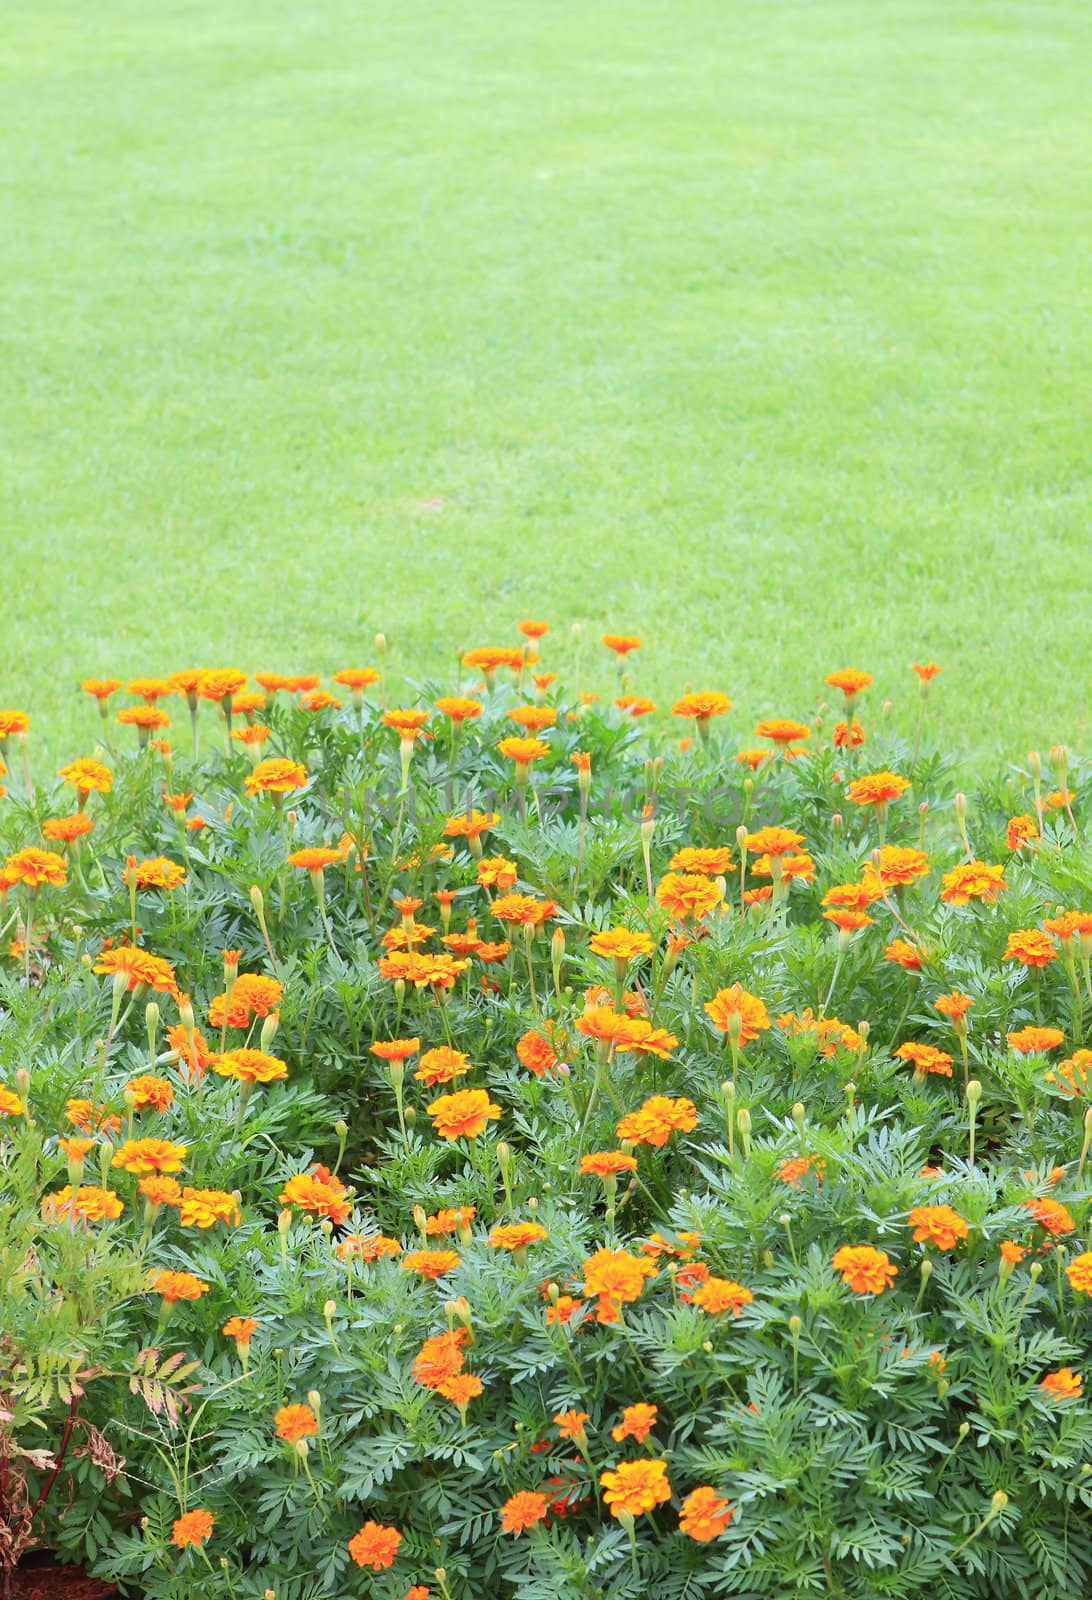 Marigold Yellow Flower field in the green garden. 
 by rufous